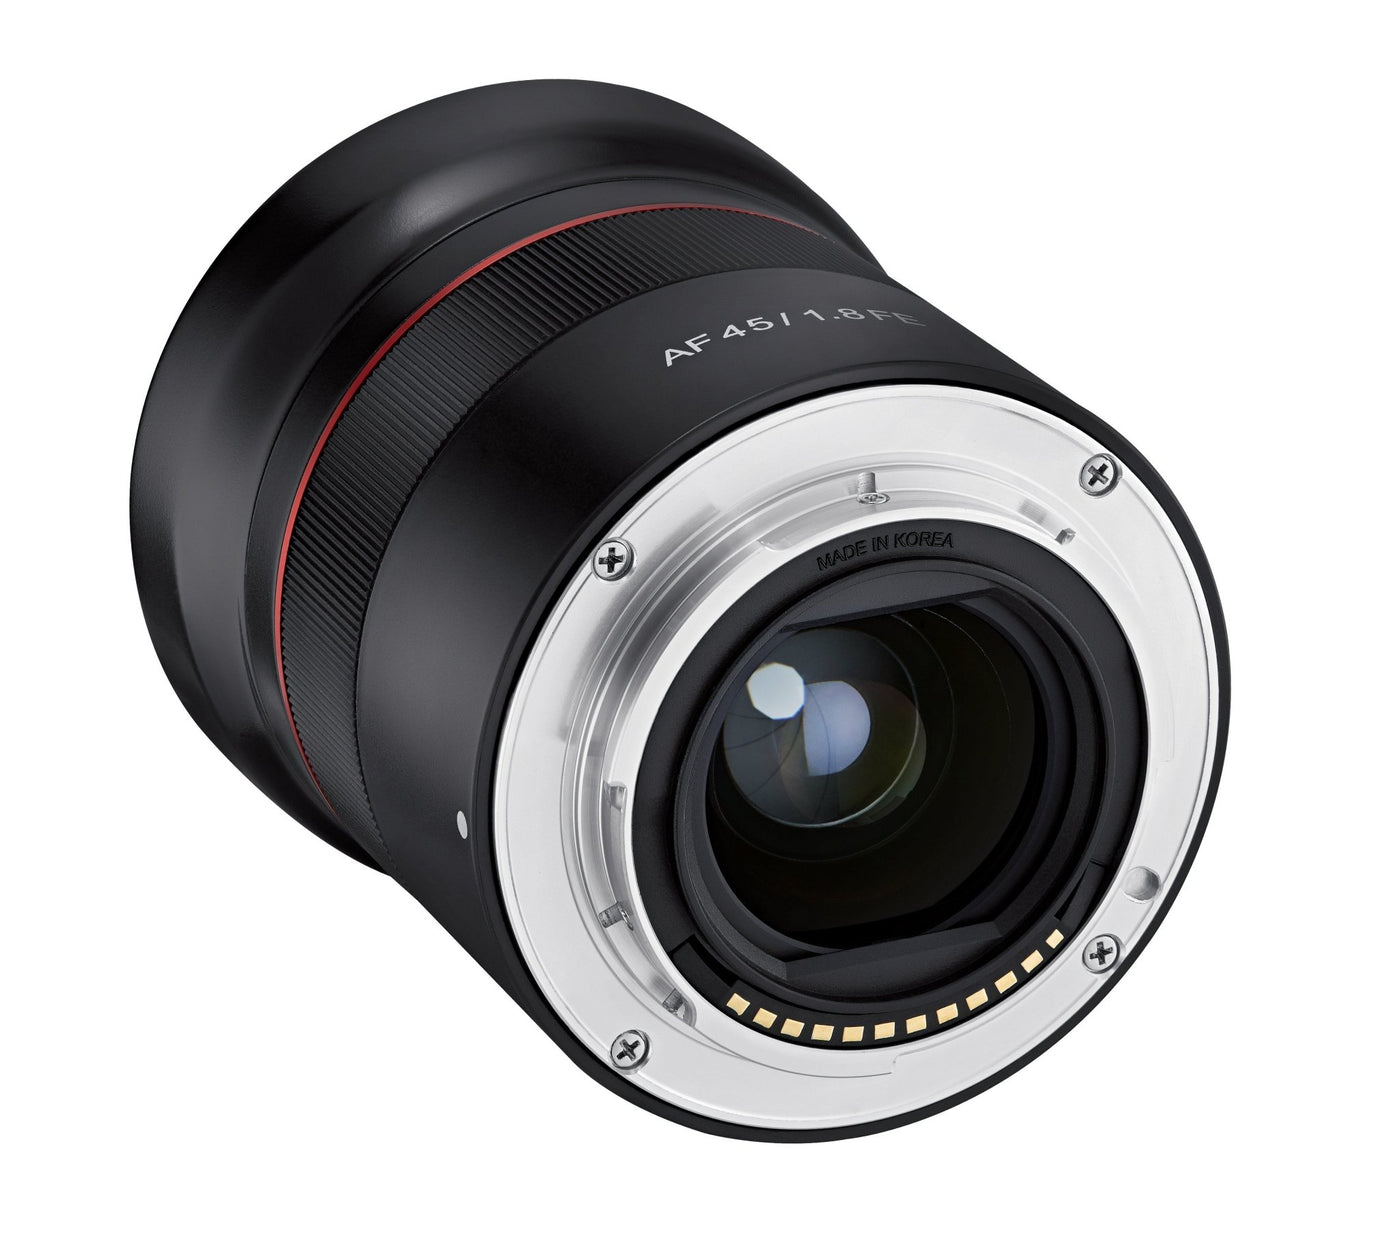 45mm F1.8 AF Compact Full Frame (Sony E) - Rokinon Lenses - IO45AF-E